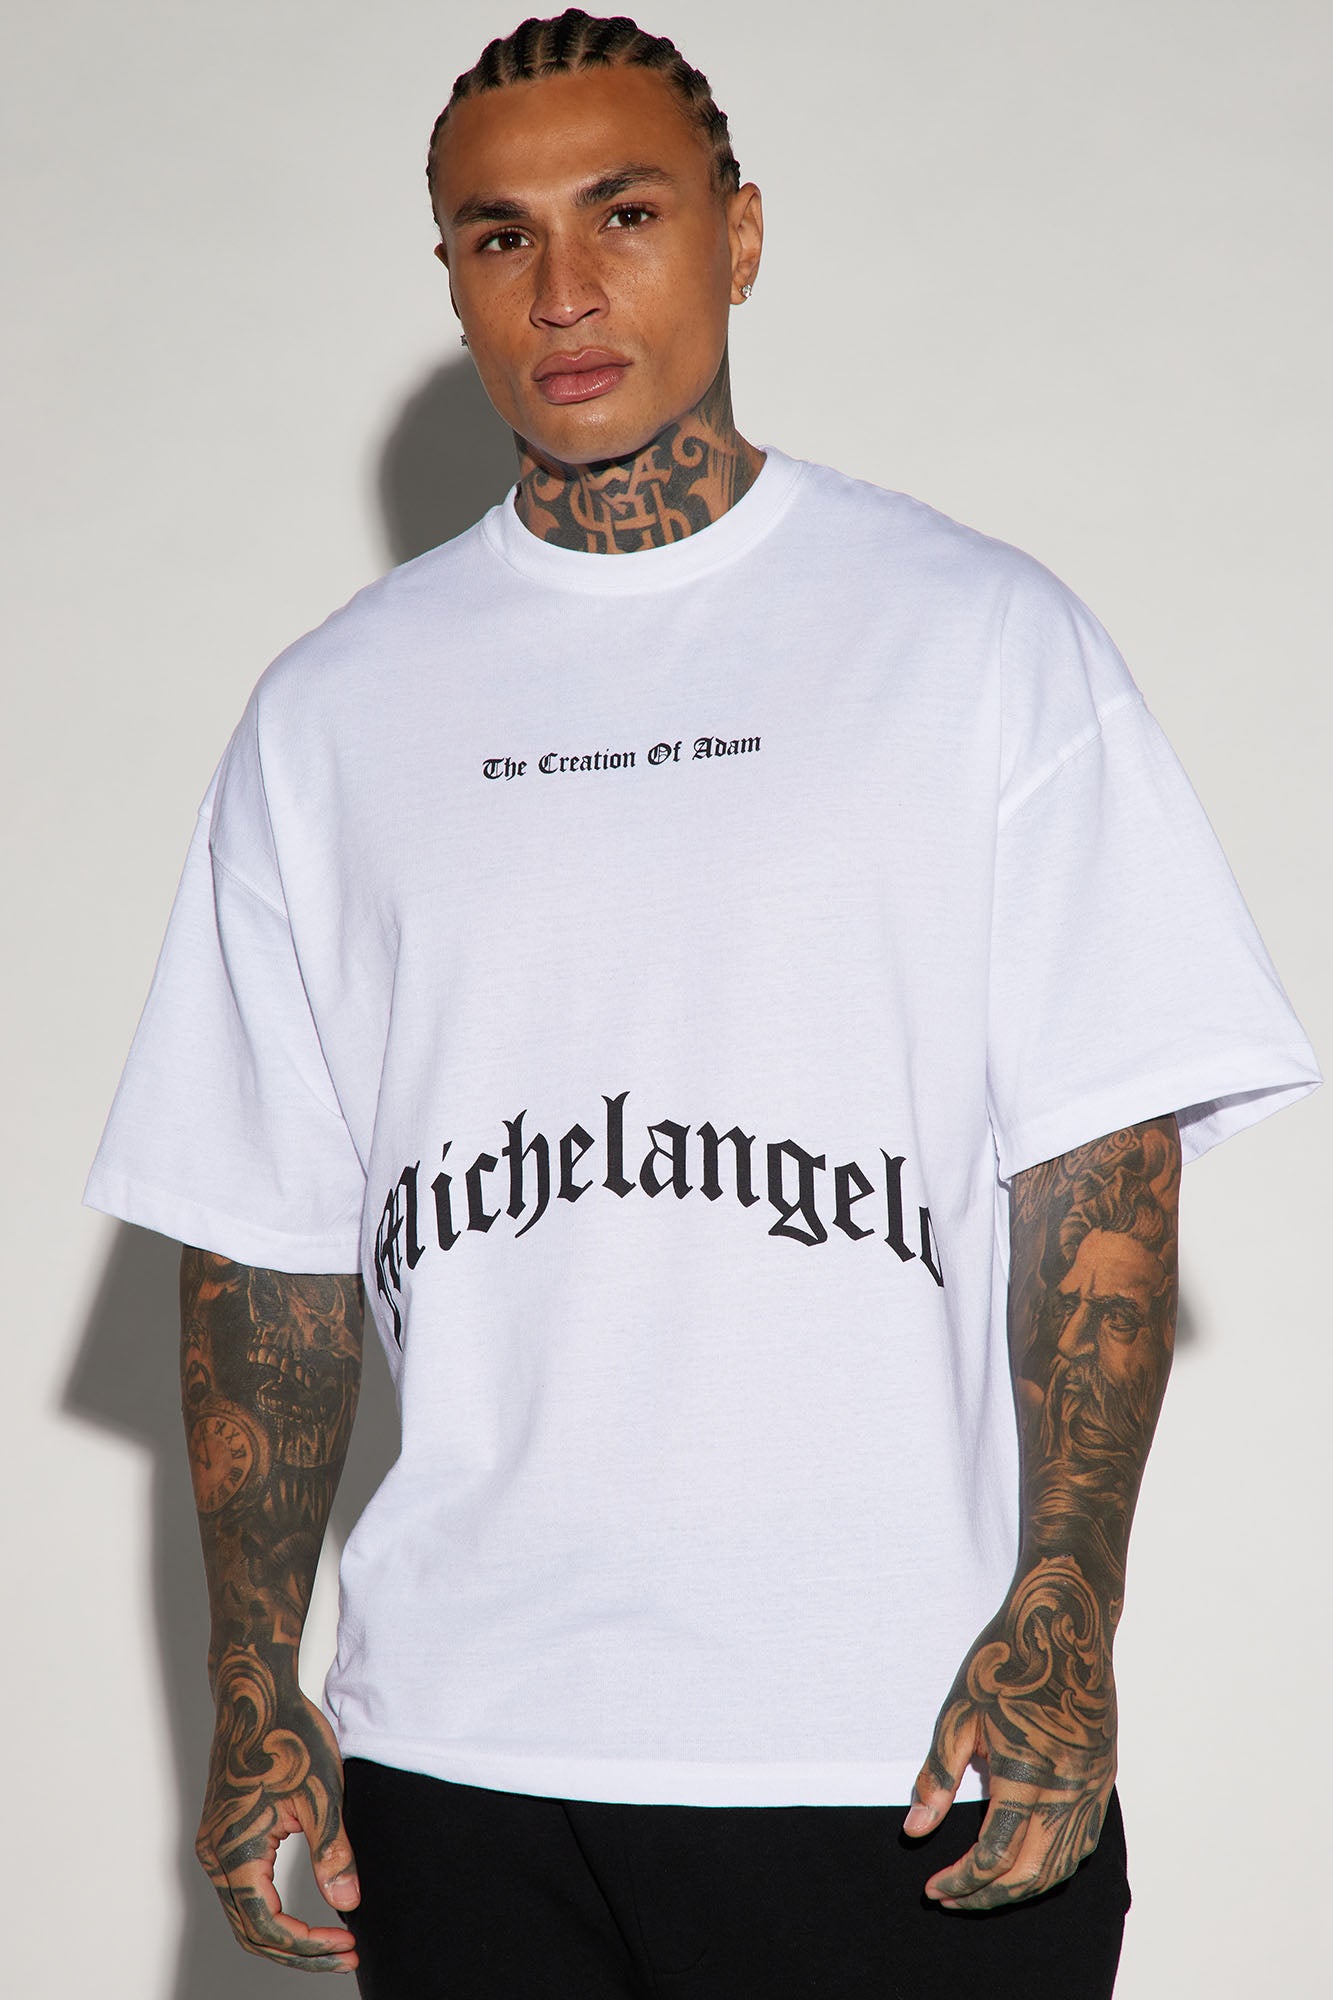 Michelangelo Custom birthday shirt